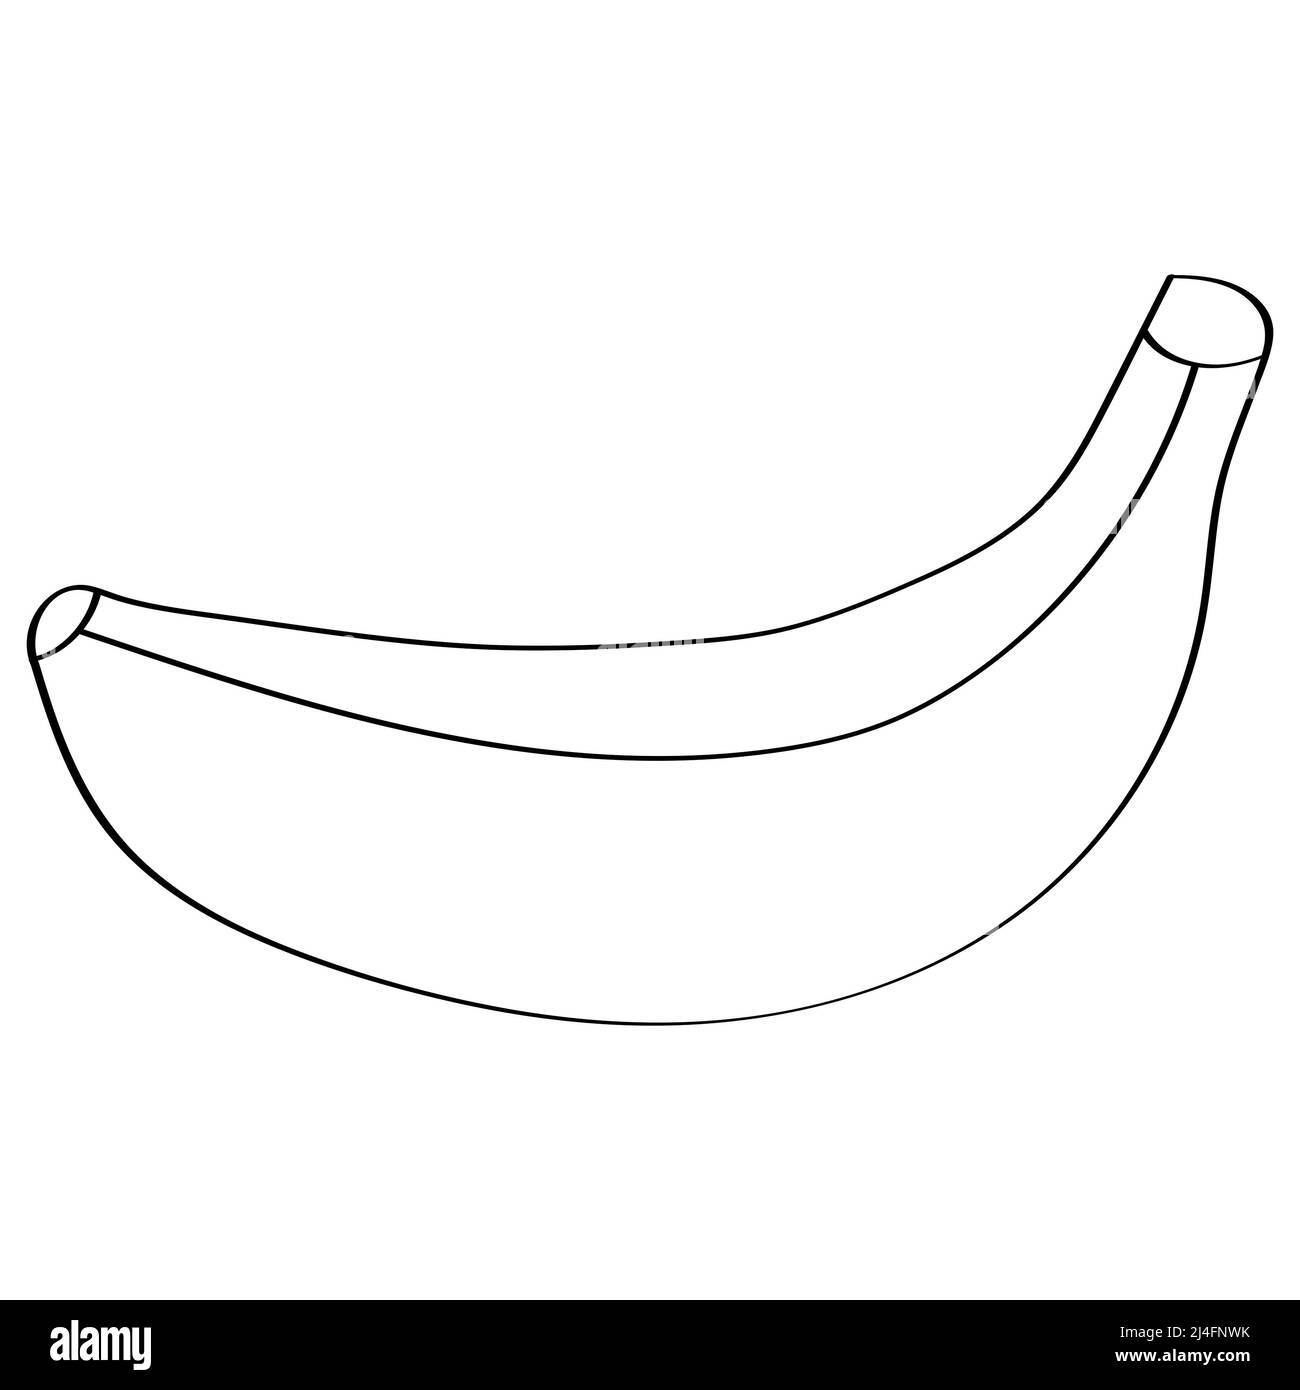 Beautiful cartoon banana isolated on white background for brush concept Stock Photo